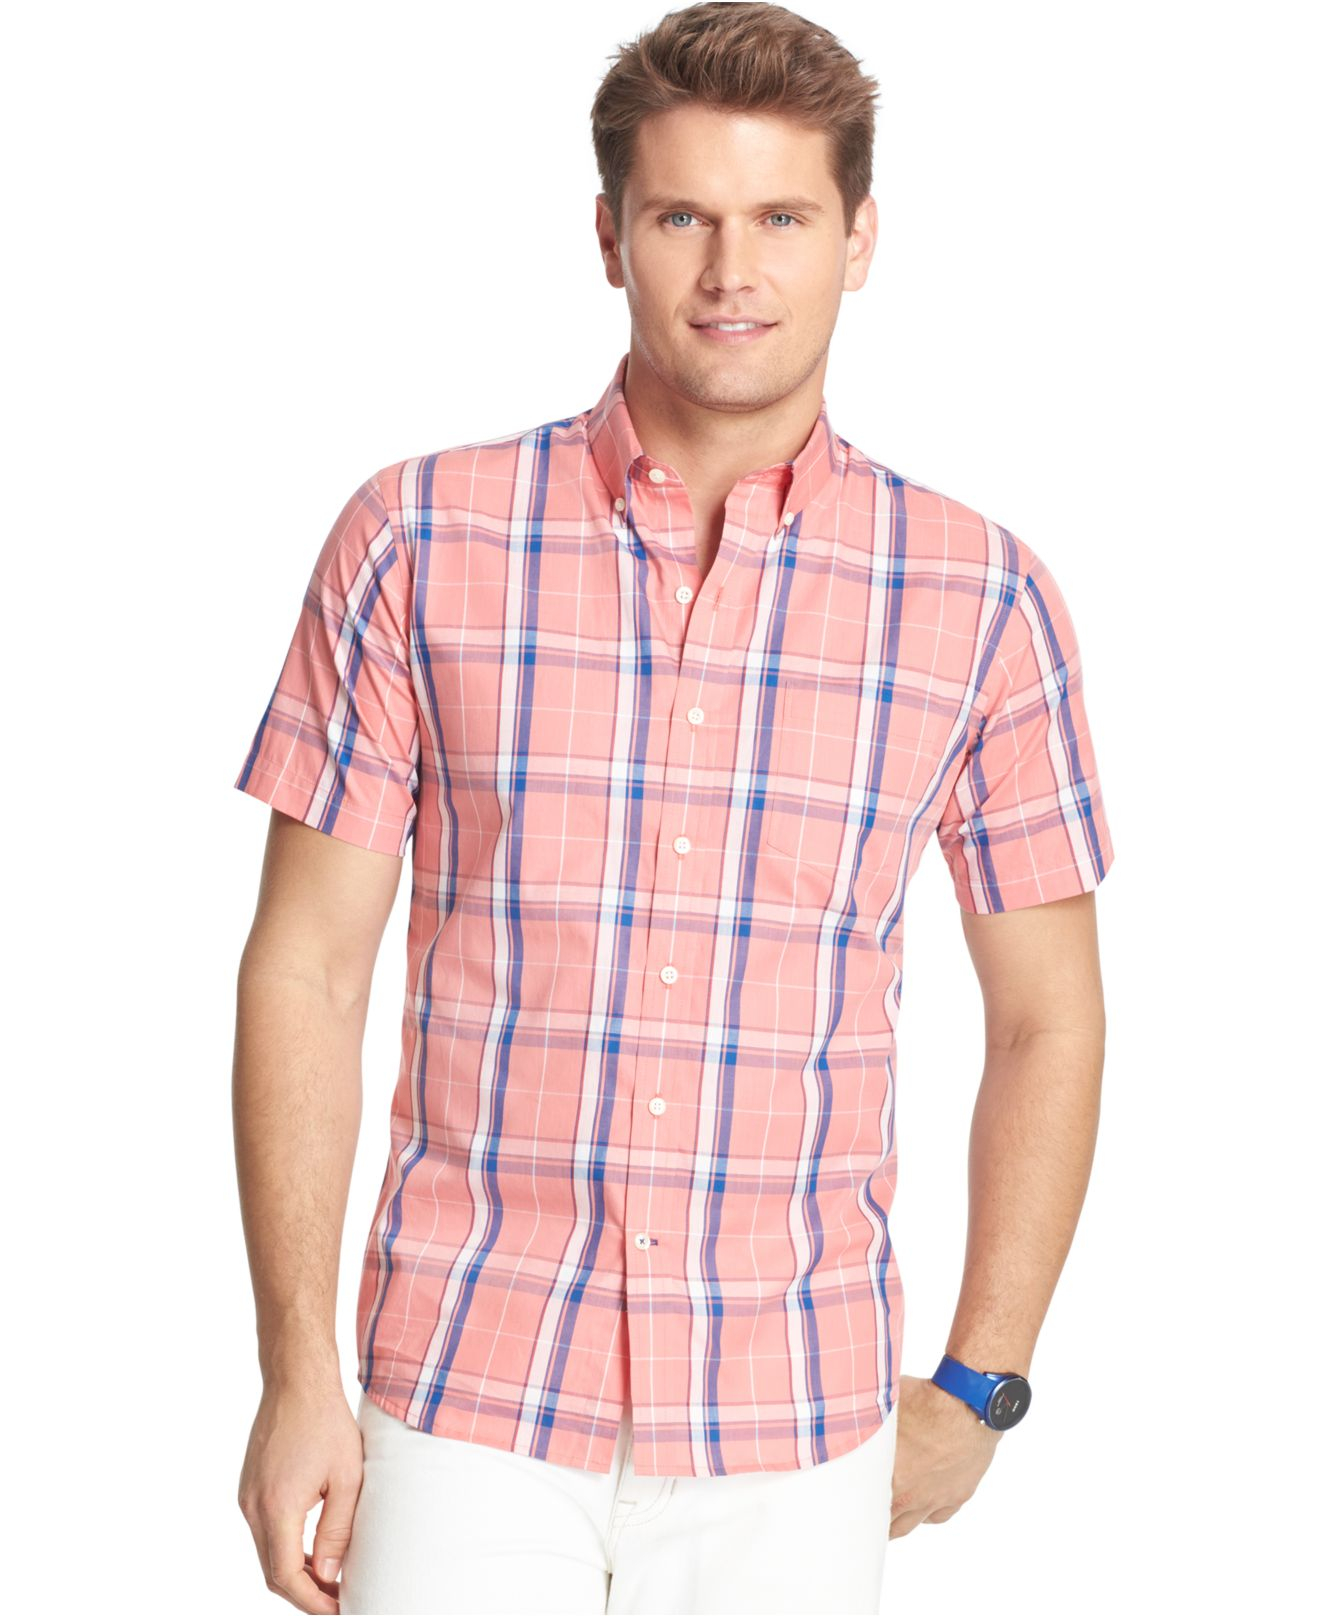 Lyst - Izod Short-sleeve Plaid Poplin Shirt in Pink for Men